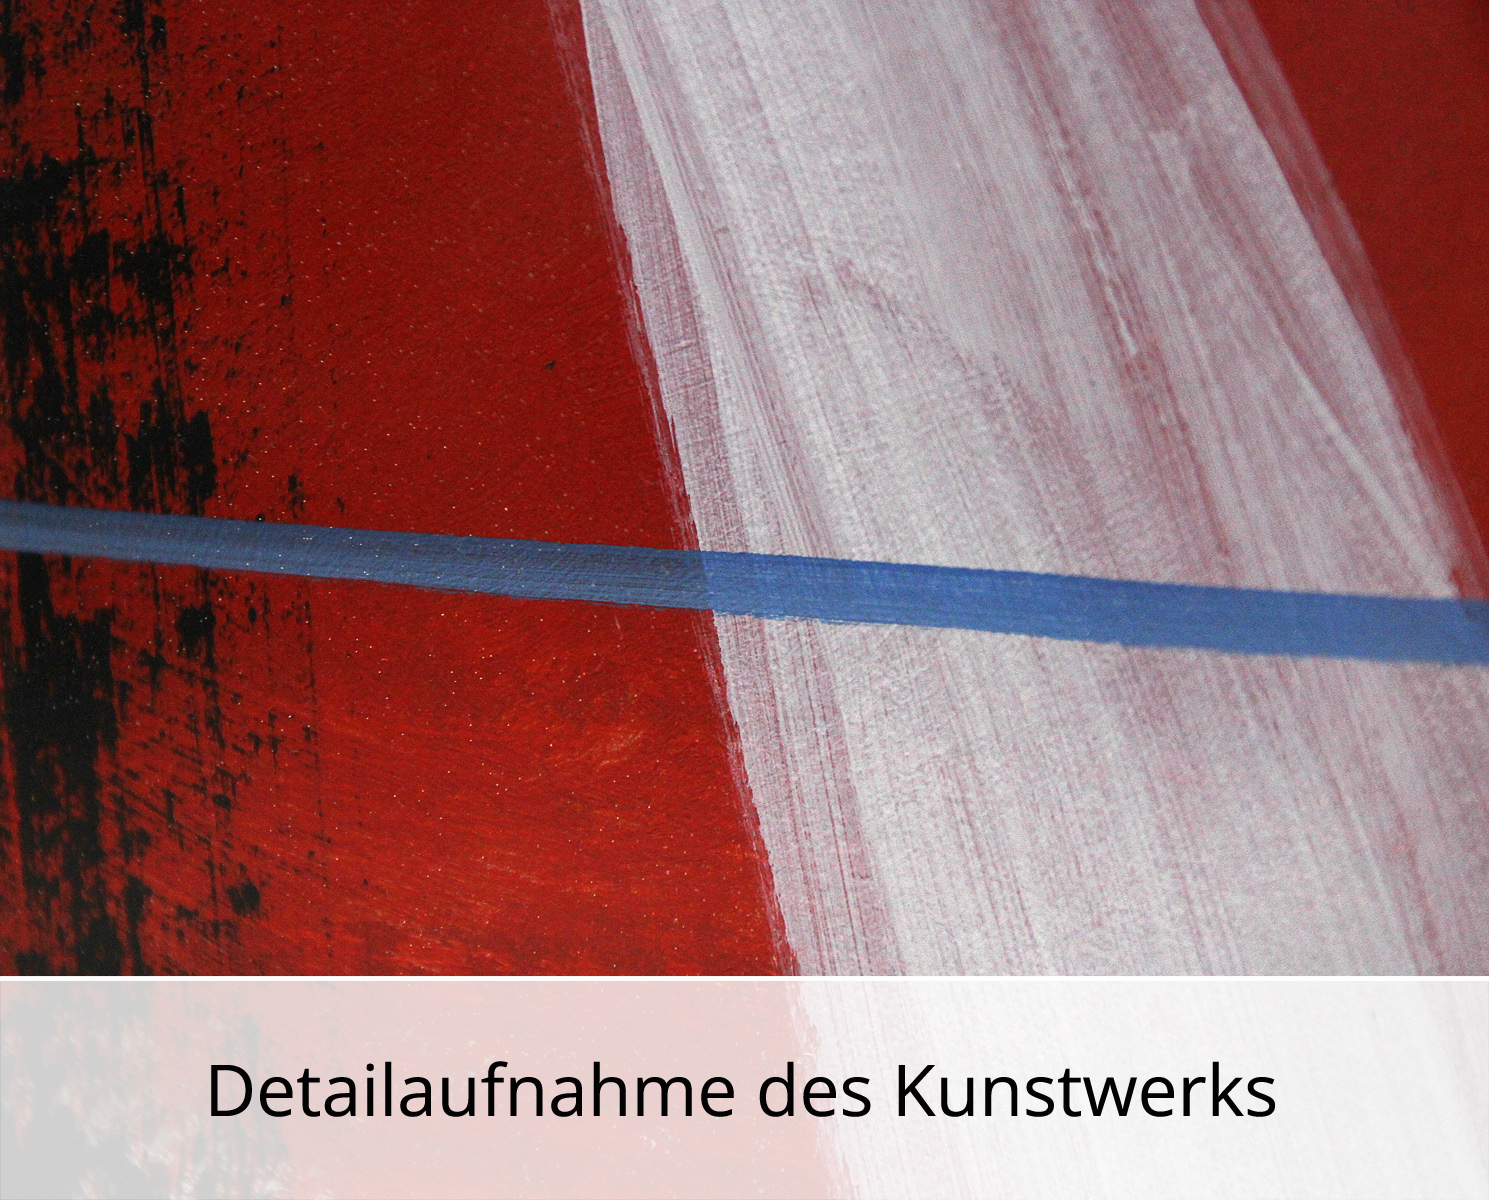 M. Cieśla: "Abstrakte Komposition, Dynamik der Form", Original/Unikat, Acryl auf Papier